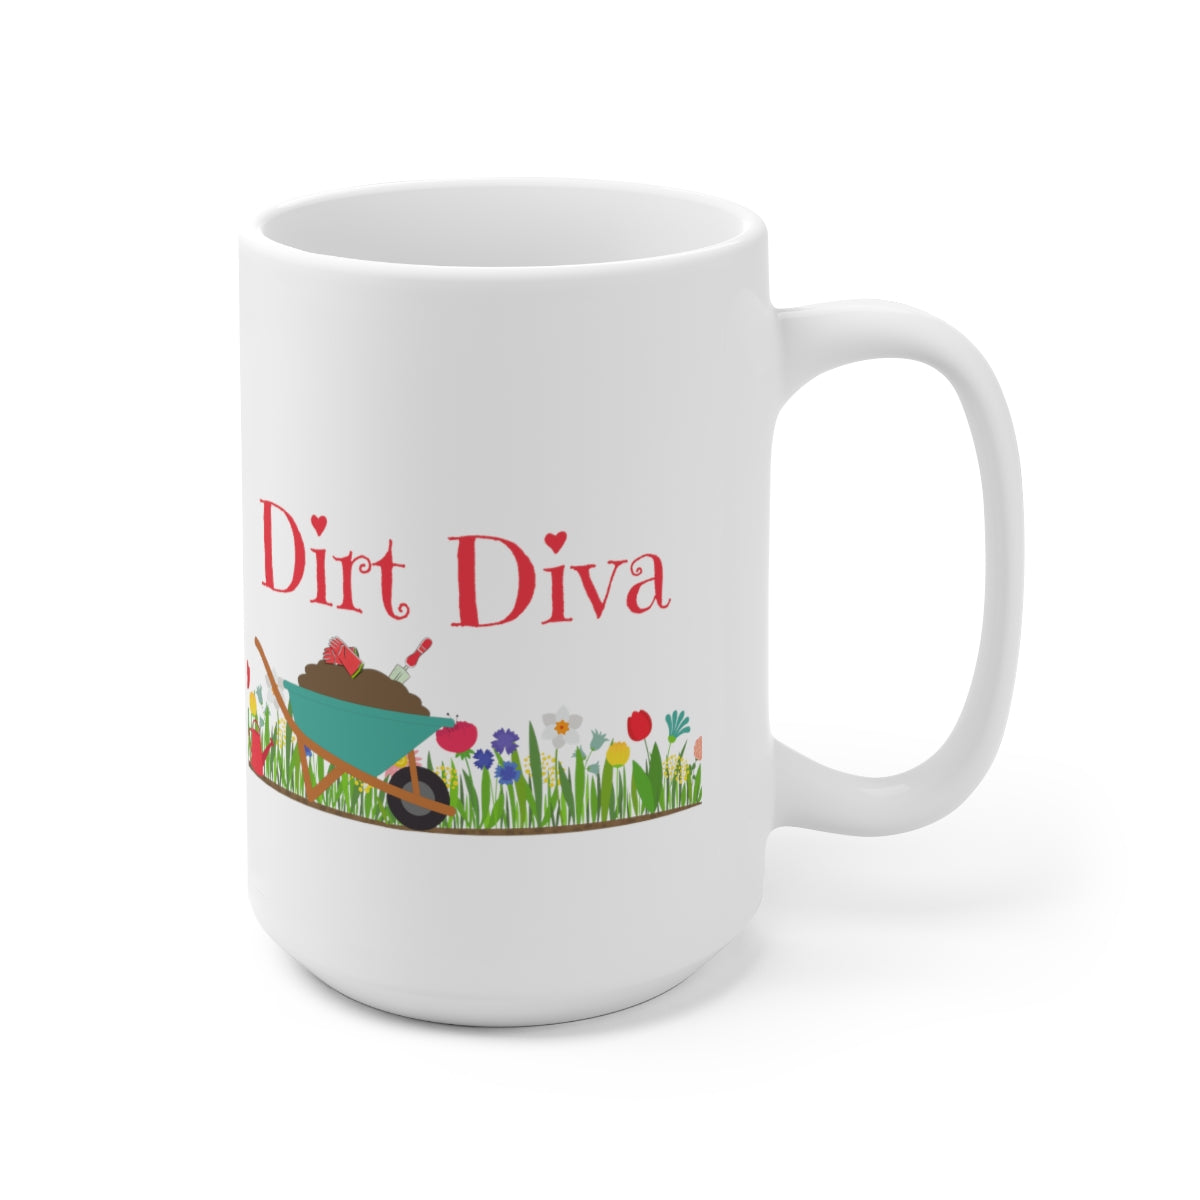 Dirt Diva - Gardener - Ceramic Mug 15oz